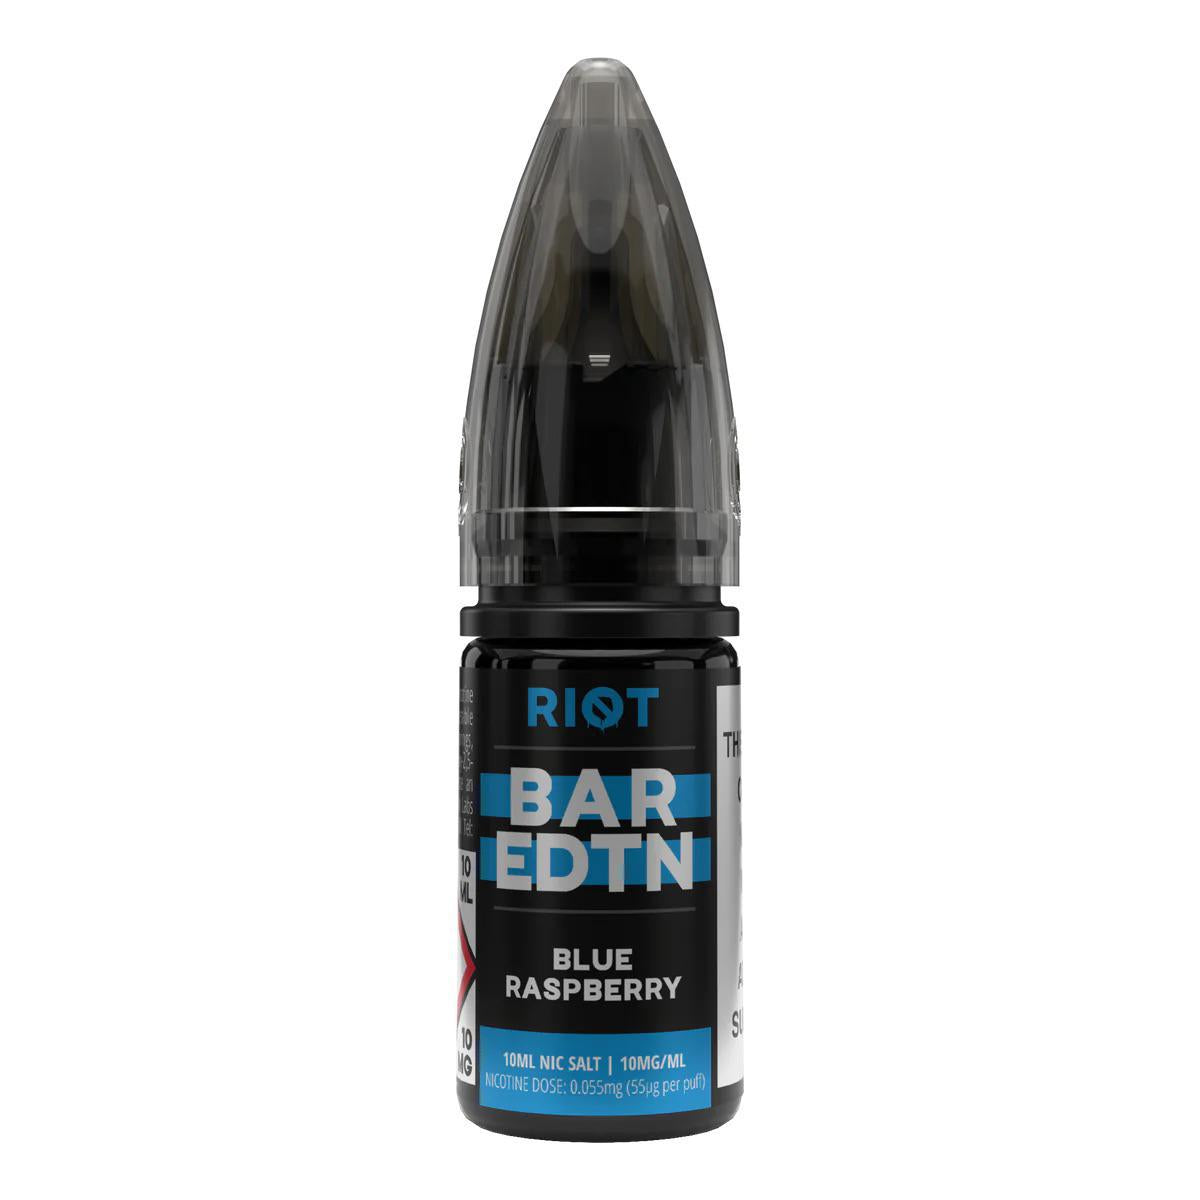 RIOT Bar EDTN - Blue Raspberry 10ml E-Liquid - The British Vape Company